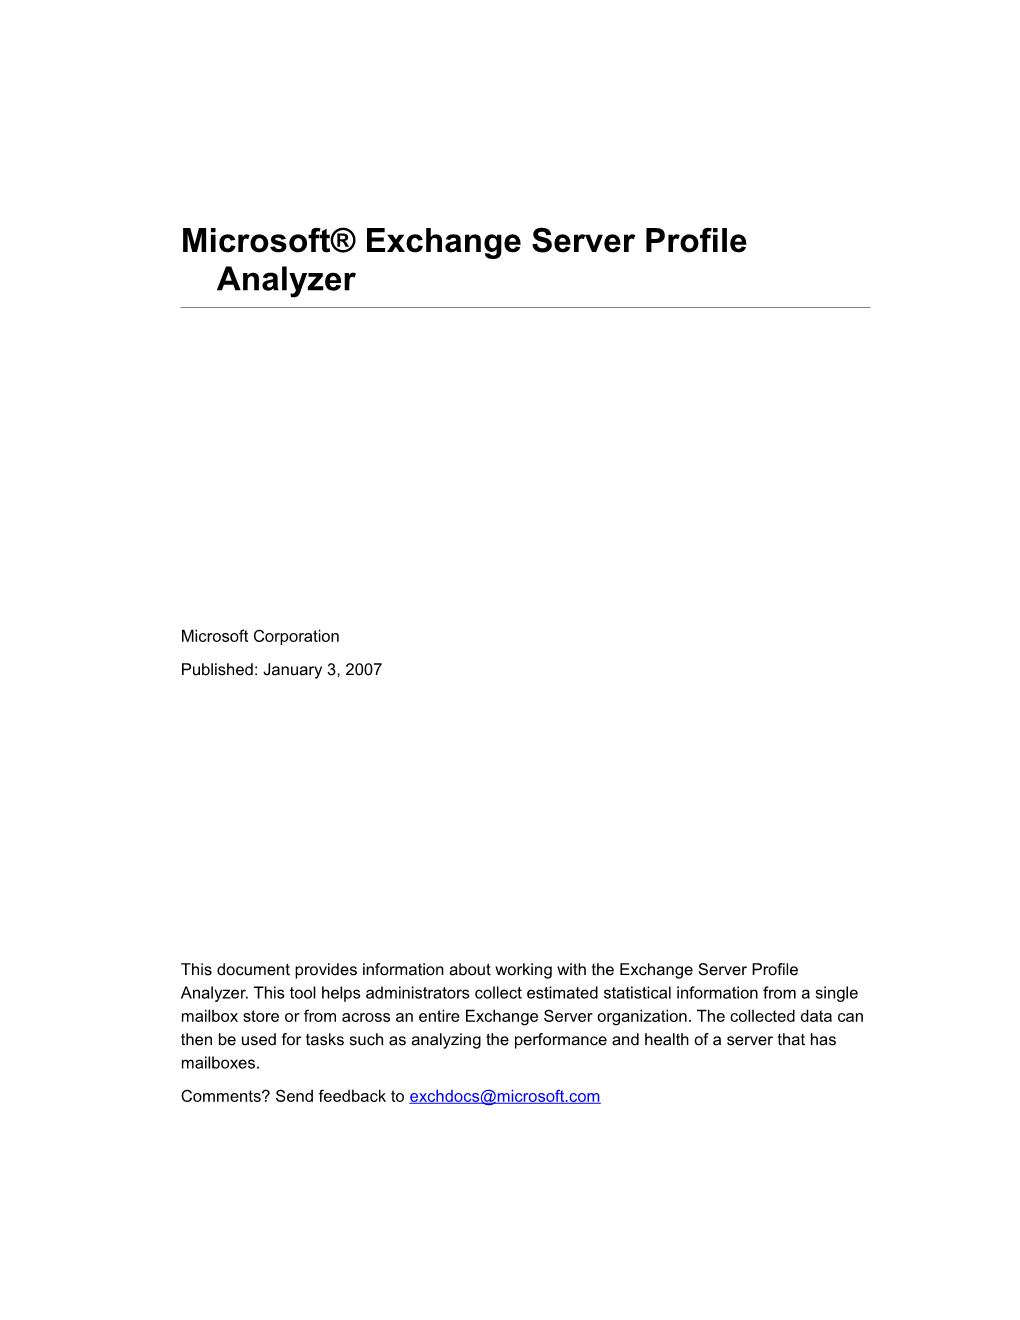 Microsoft Exchange Server Profile Analyzer